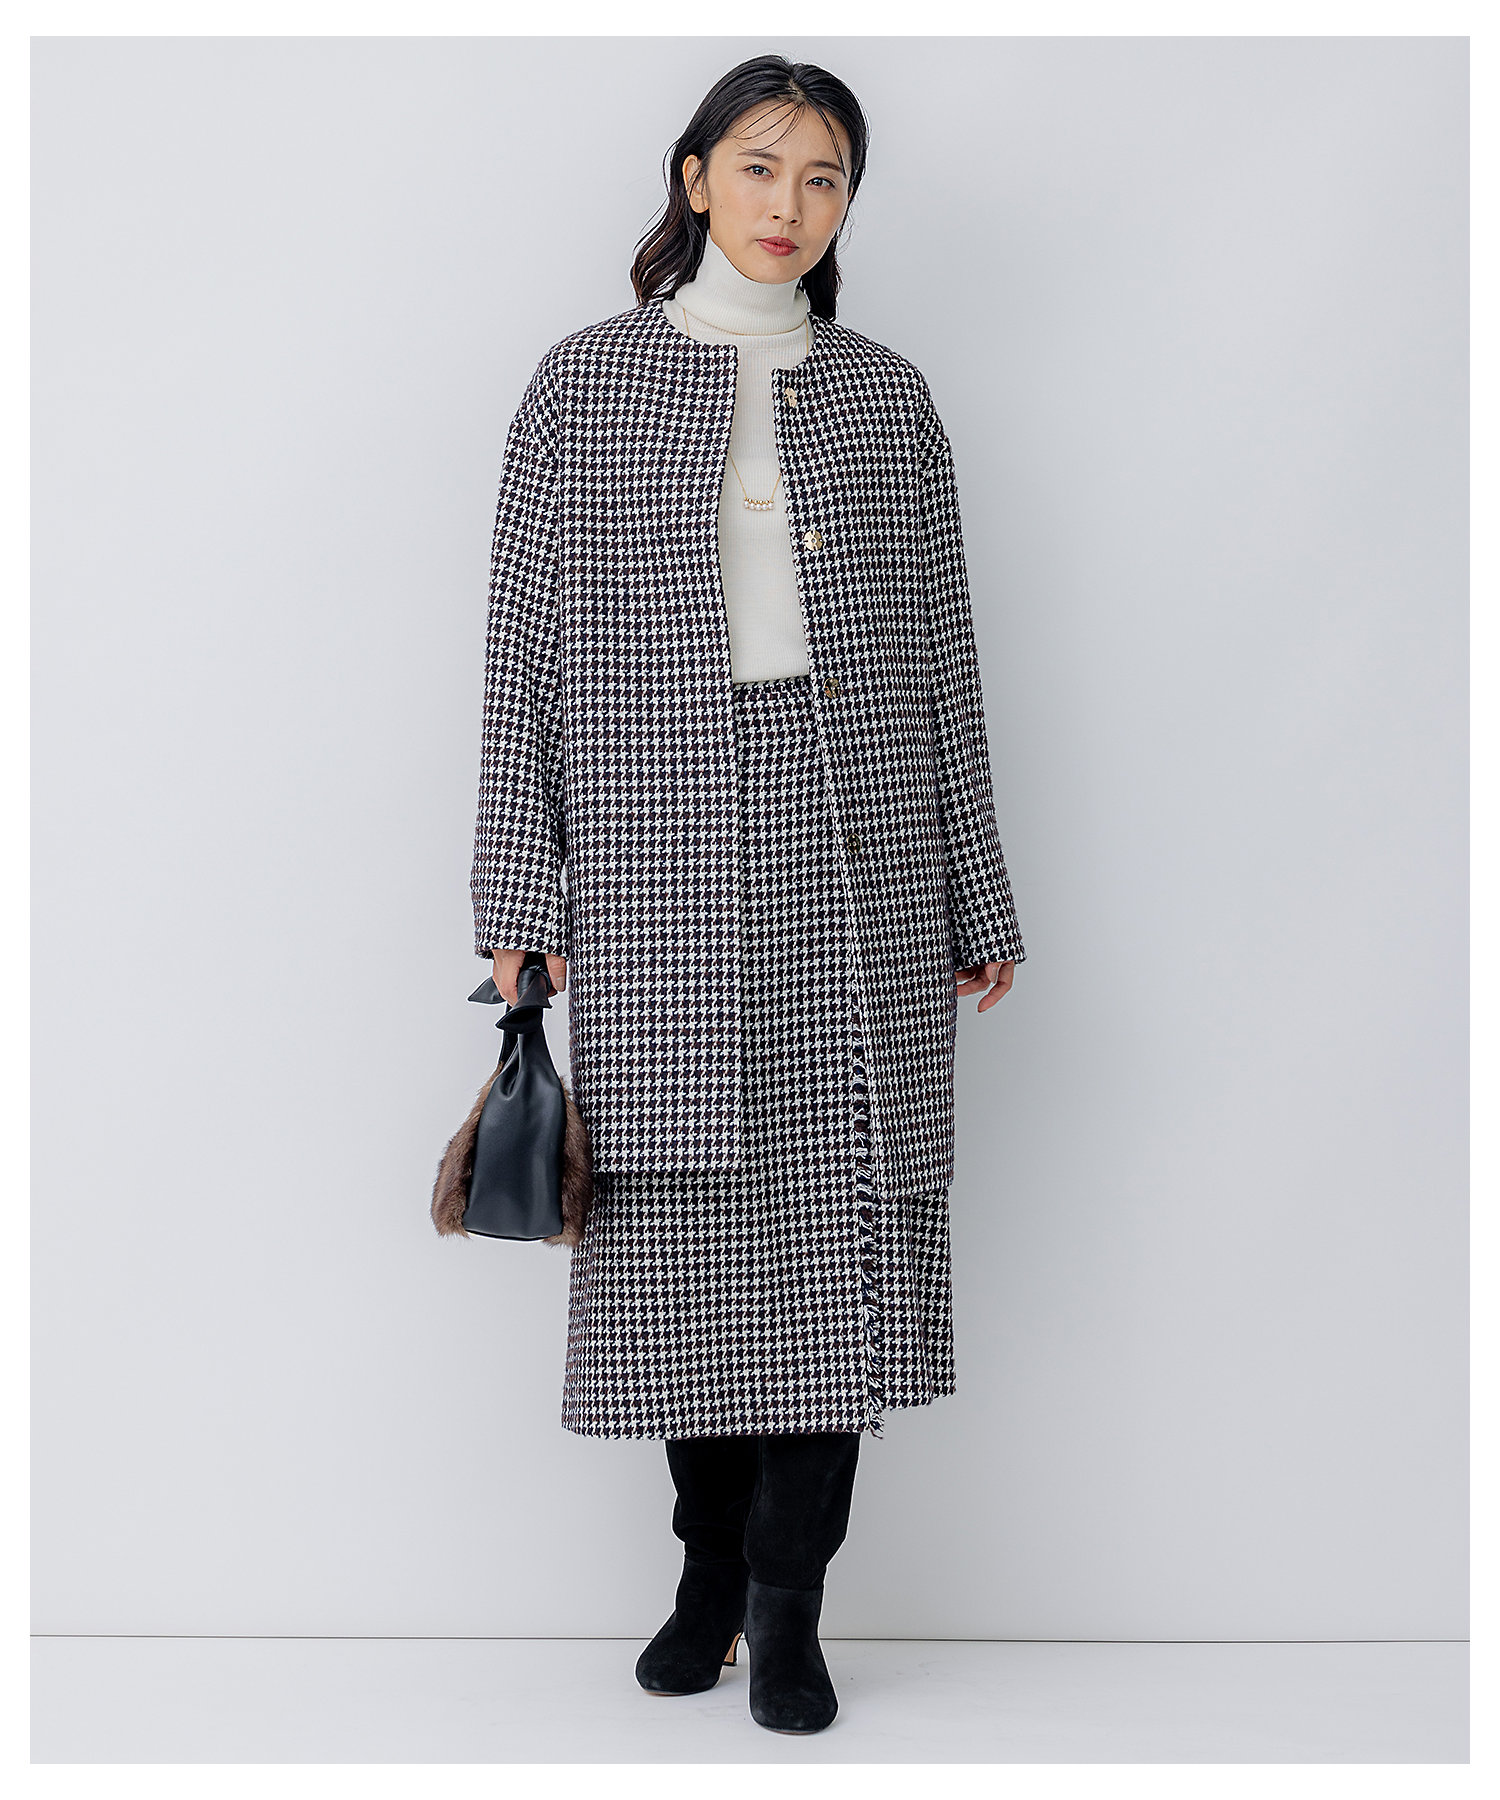 【IENA】Sサイズ ツイード ノーカラー コート 黒 ベース 金 糸78袖丈